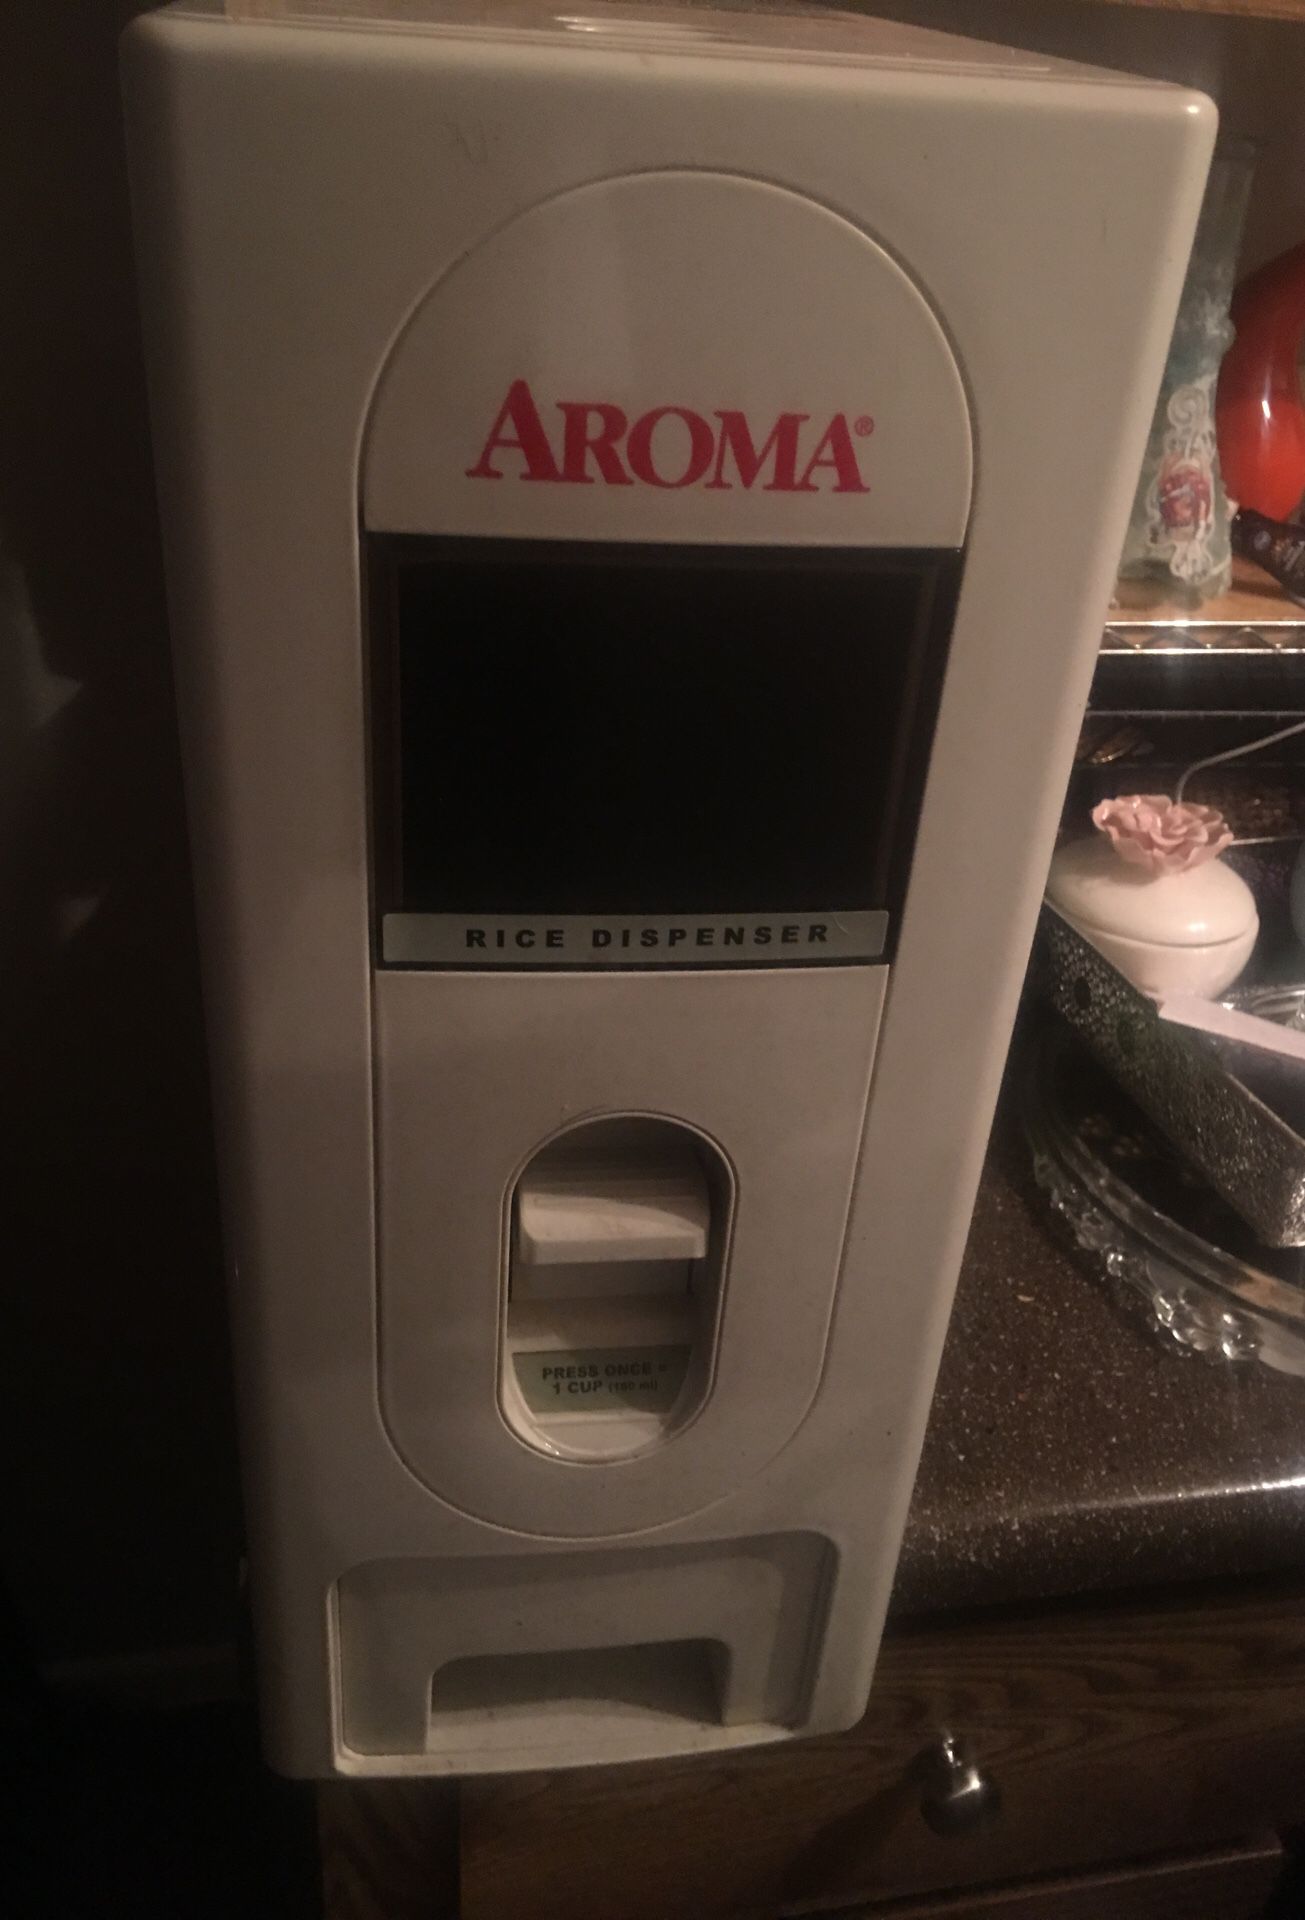 Aroma rice dispenser